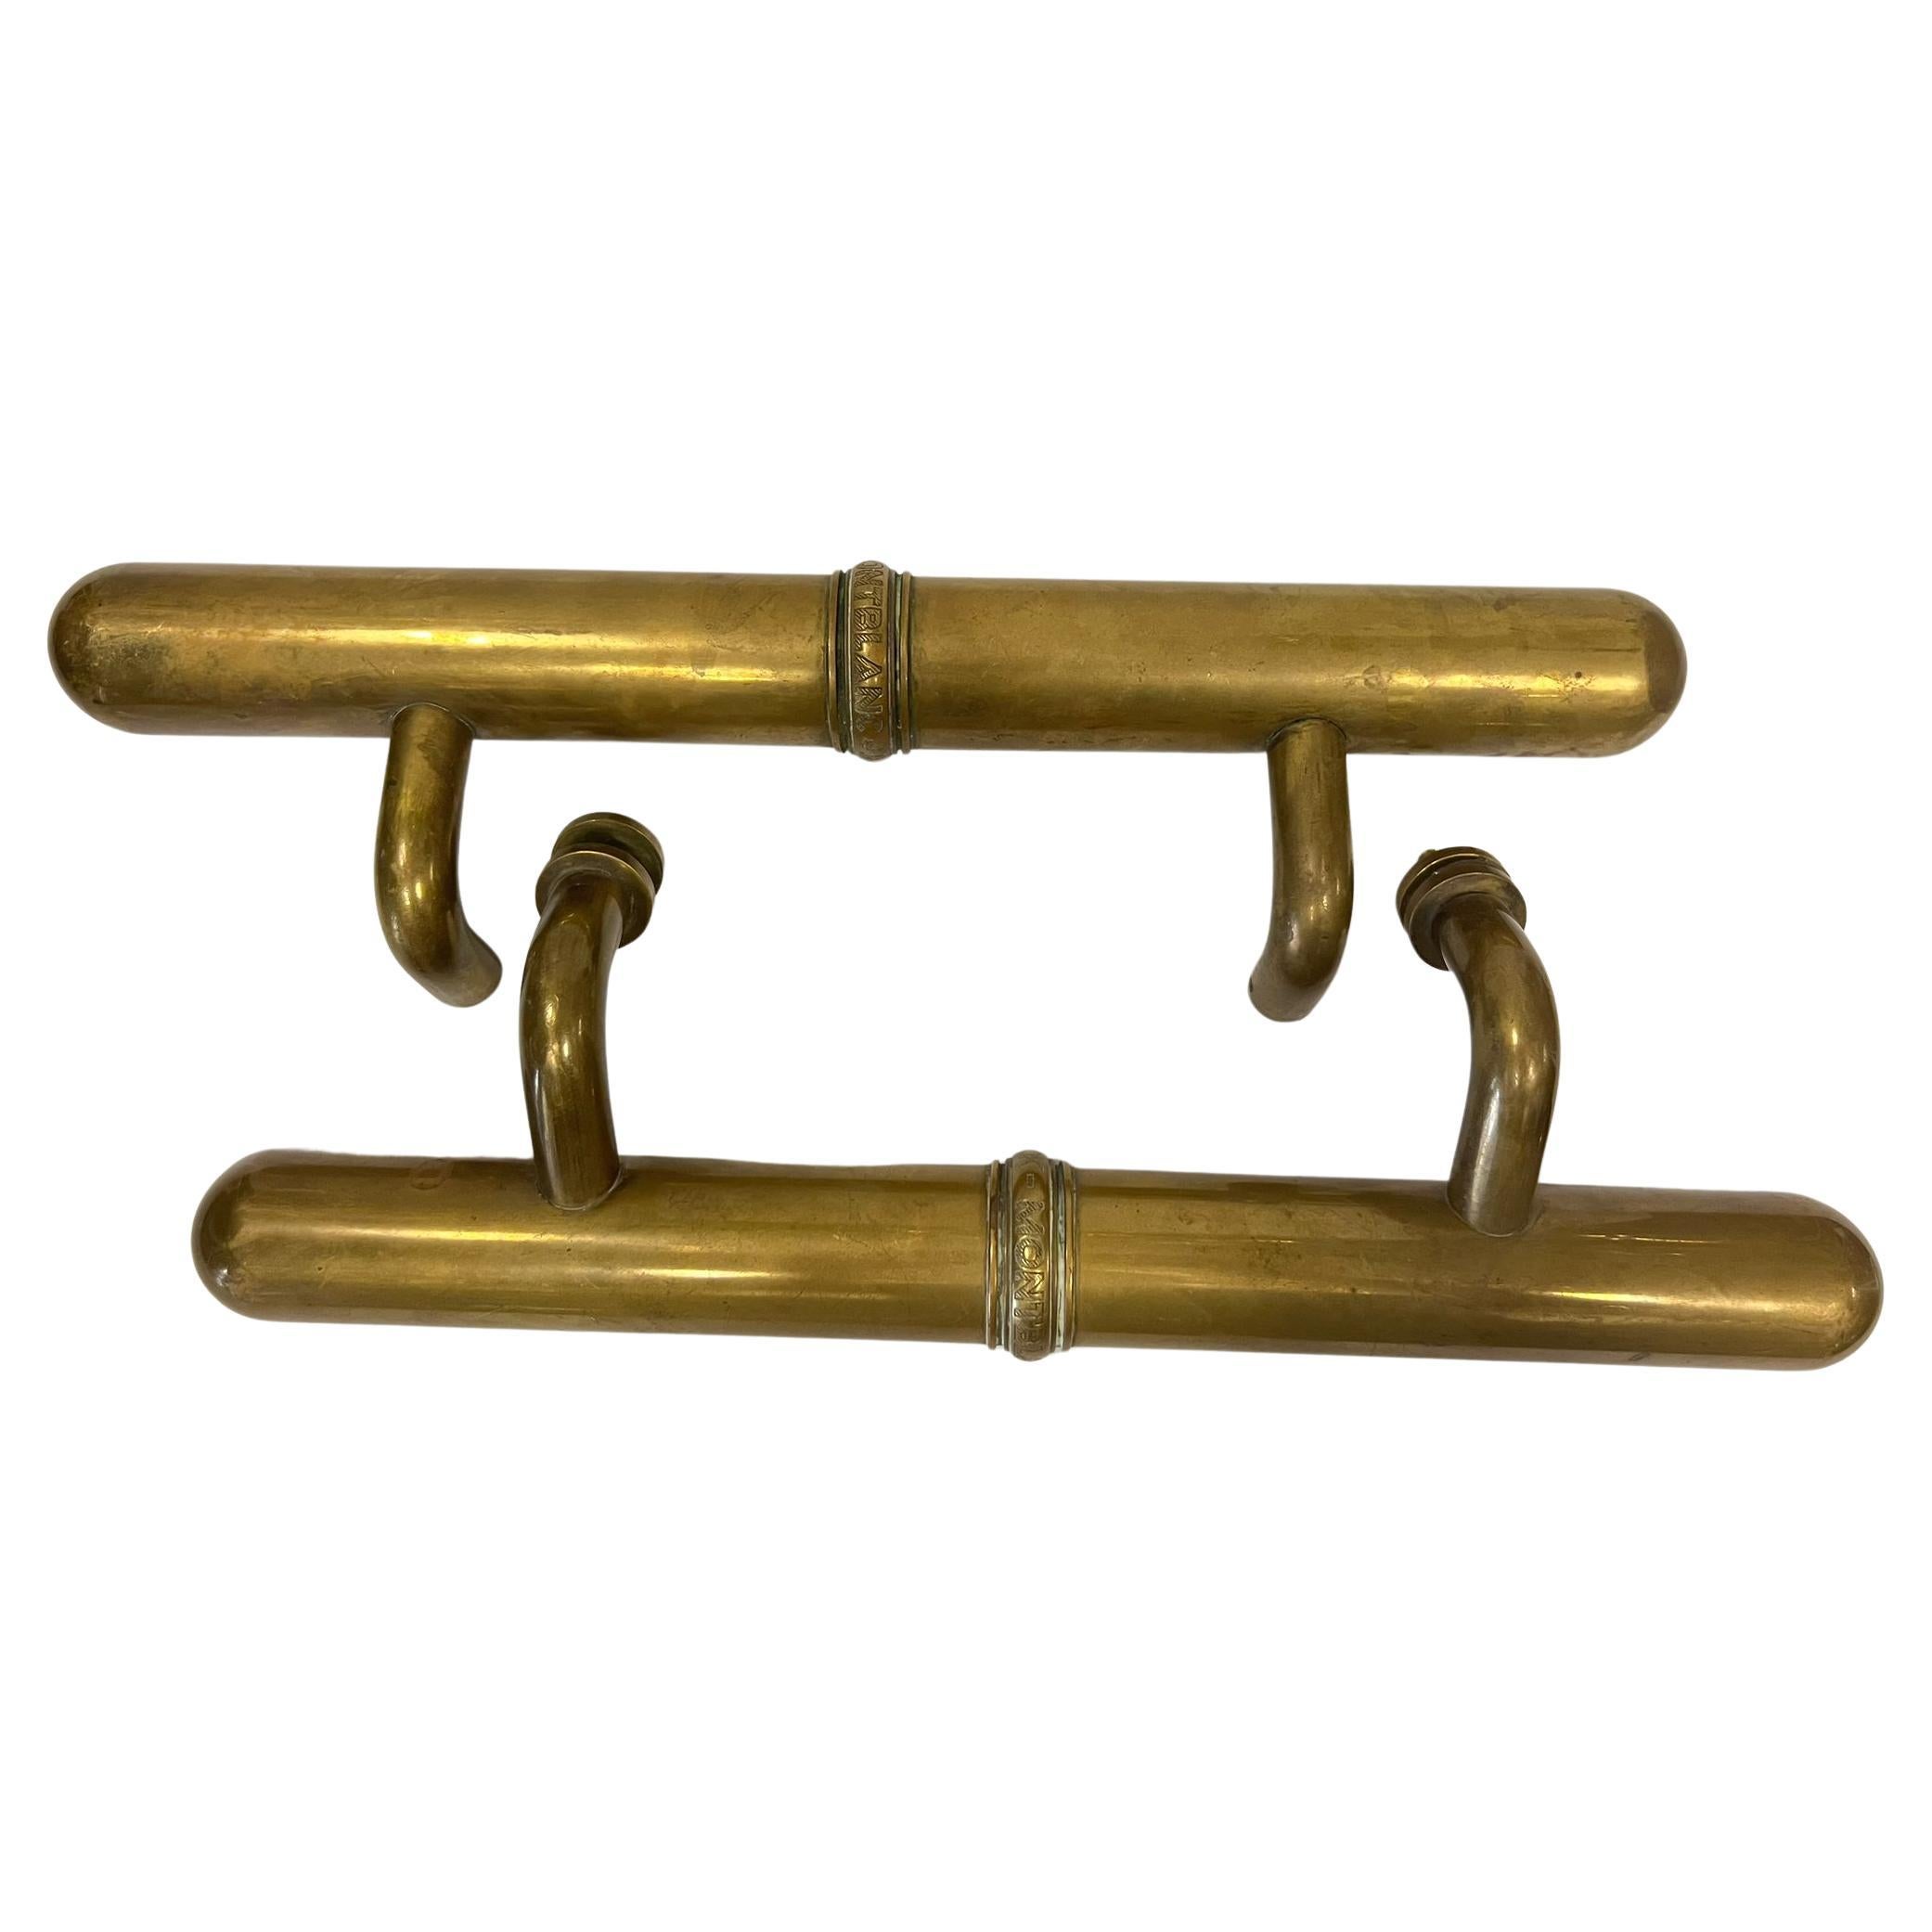 Rare Montblanc masterpiece solid brass door handles, very good original condition, weight 8 kilo.